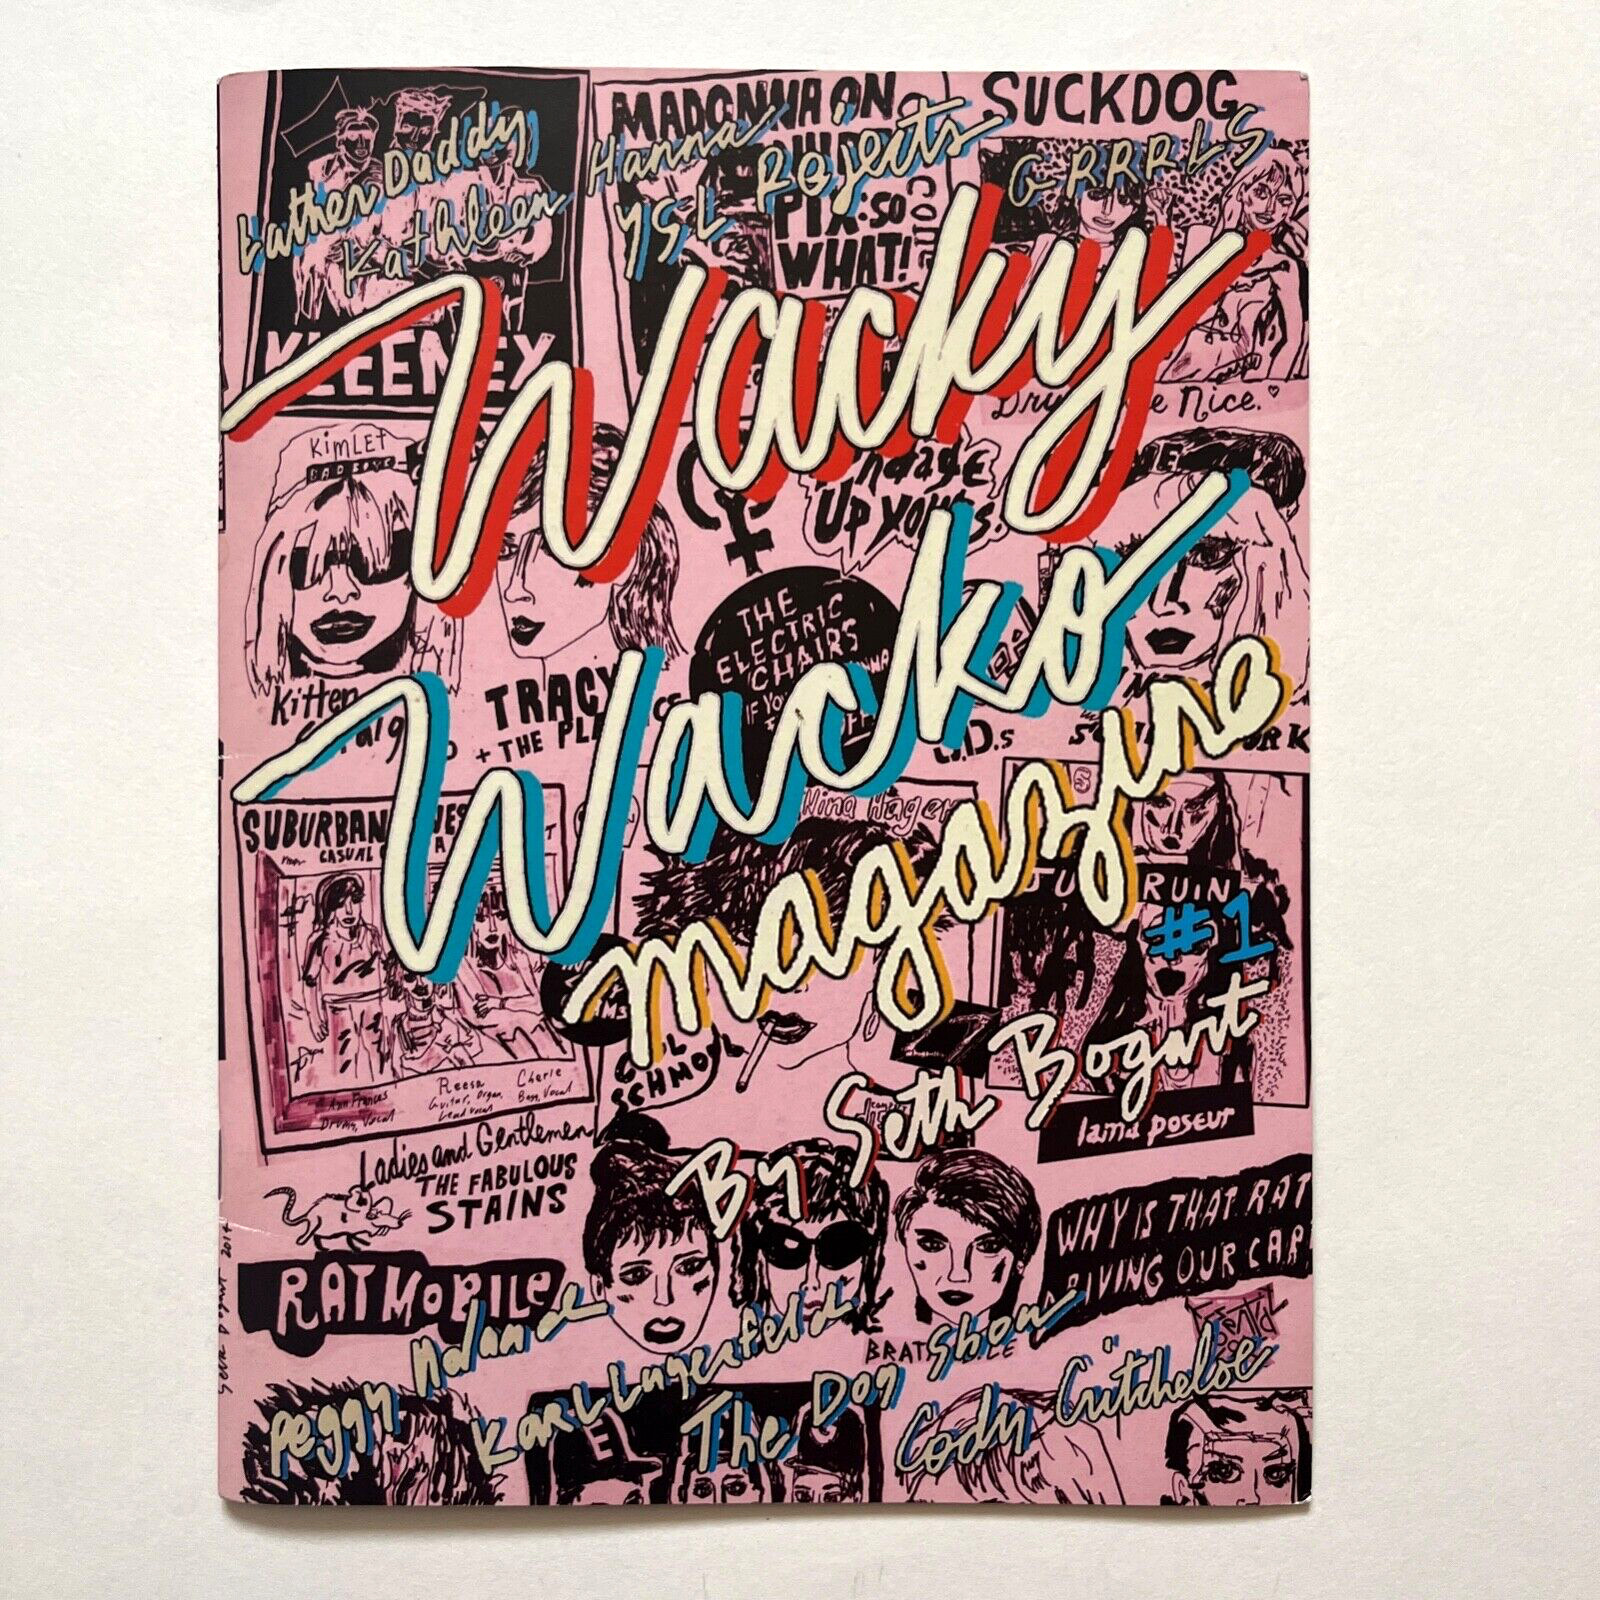 WACKY WACKO MAGAZINE - 2014 Limited 1000 Marc Jacobs Kathleen Hanna Seth Bogart